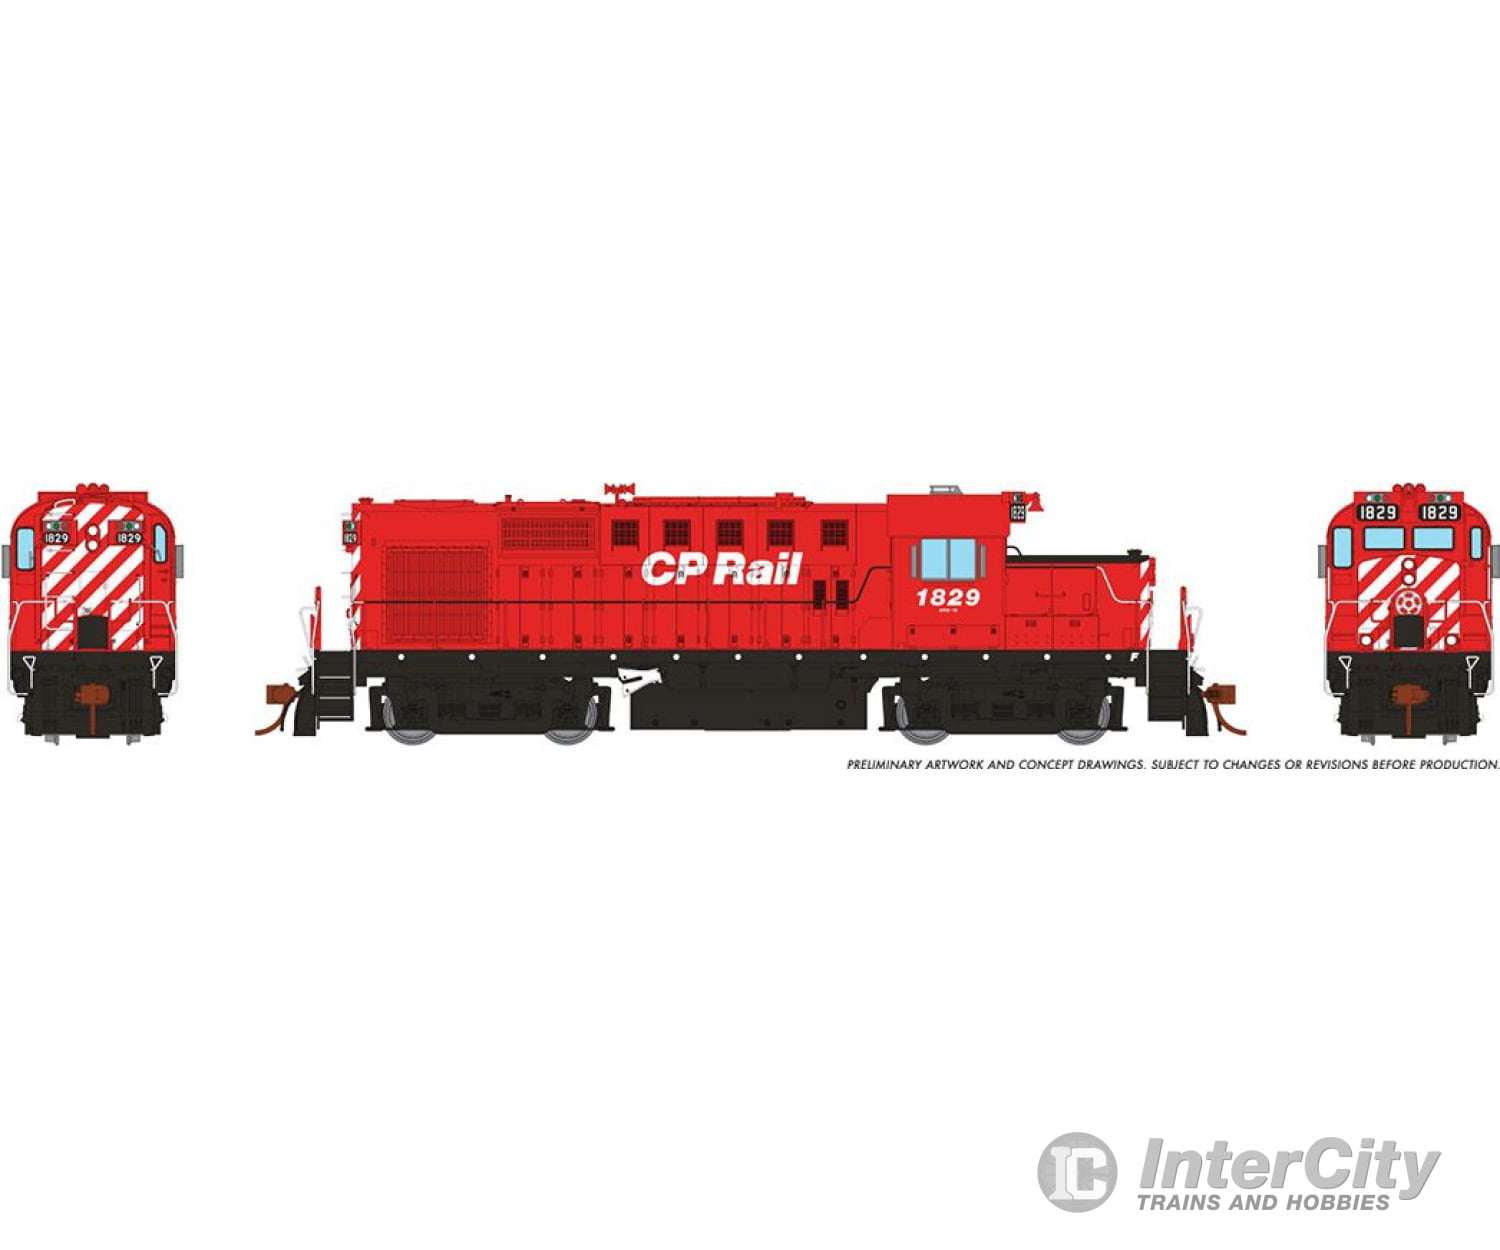 Rapido 032566 Ho Rs-18 (Dc/Dcc/Sound): Cp Rail (No Multimark) #1829 Locomotives & Railcars